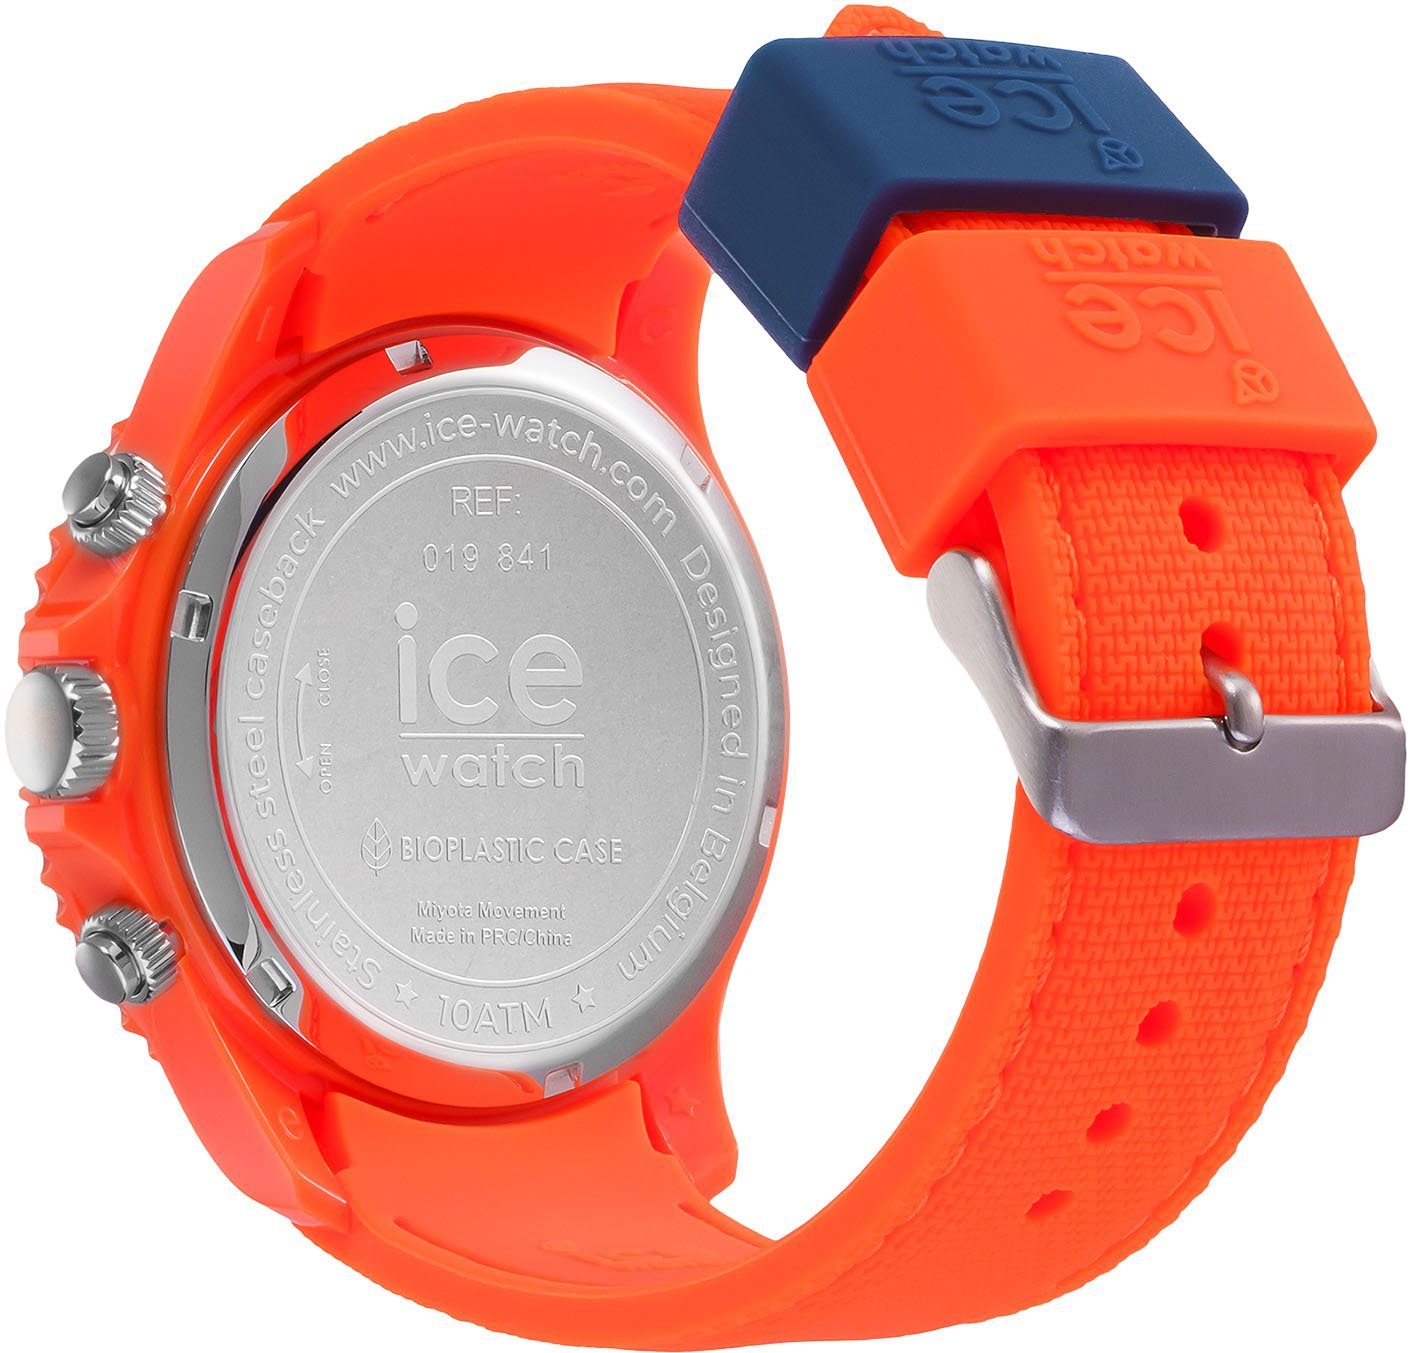 ice-watch Chronograph ICE chrono 019841 blue Orange - Large - CH, 